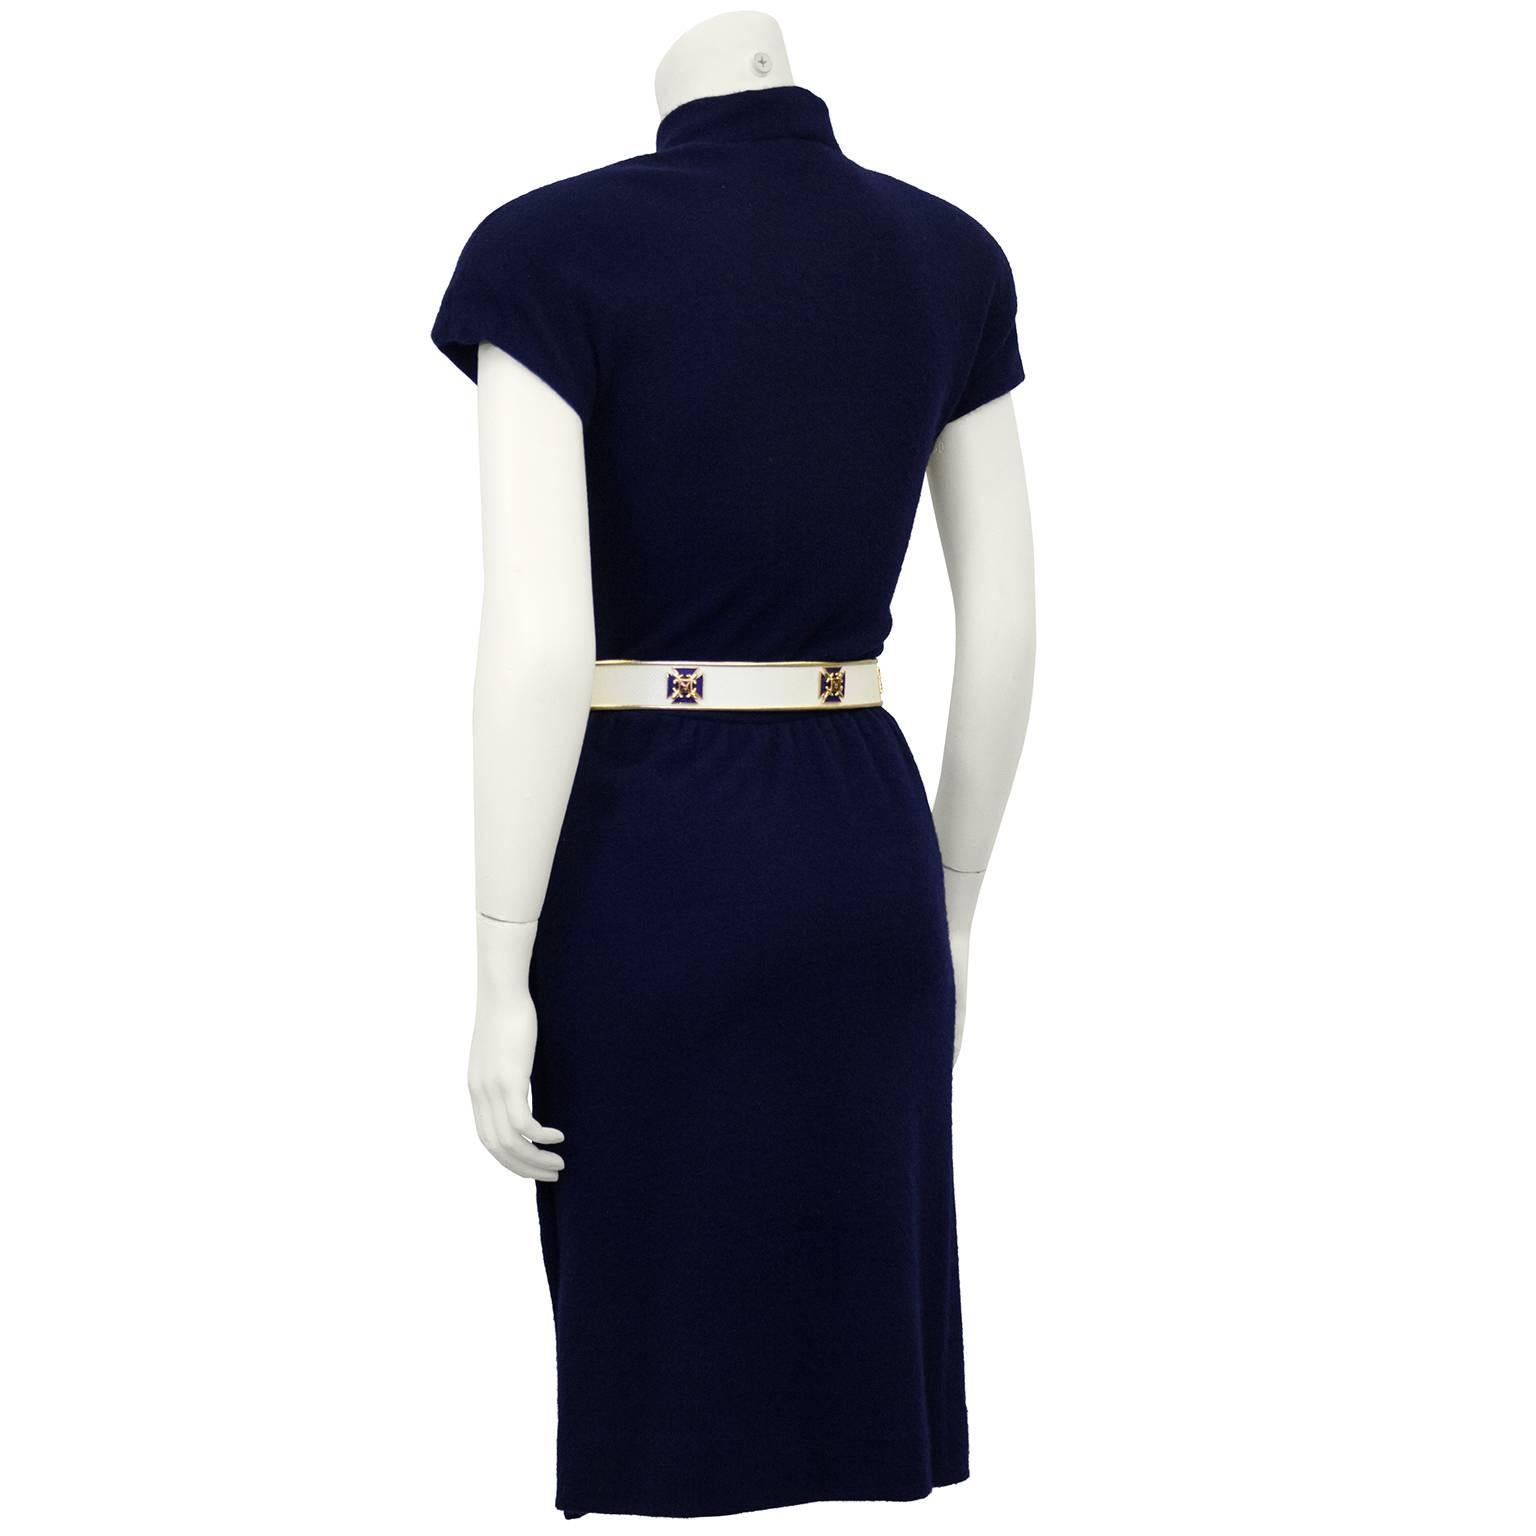 belt for navy blue dress